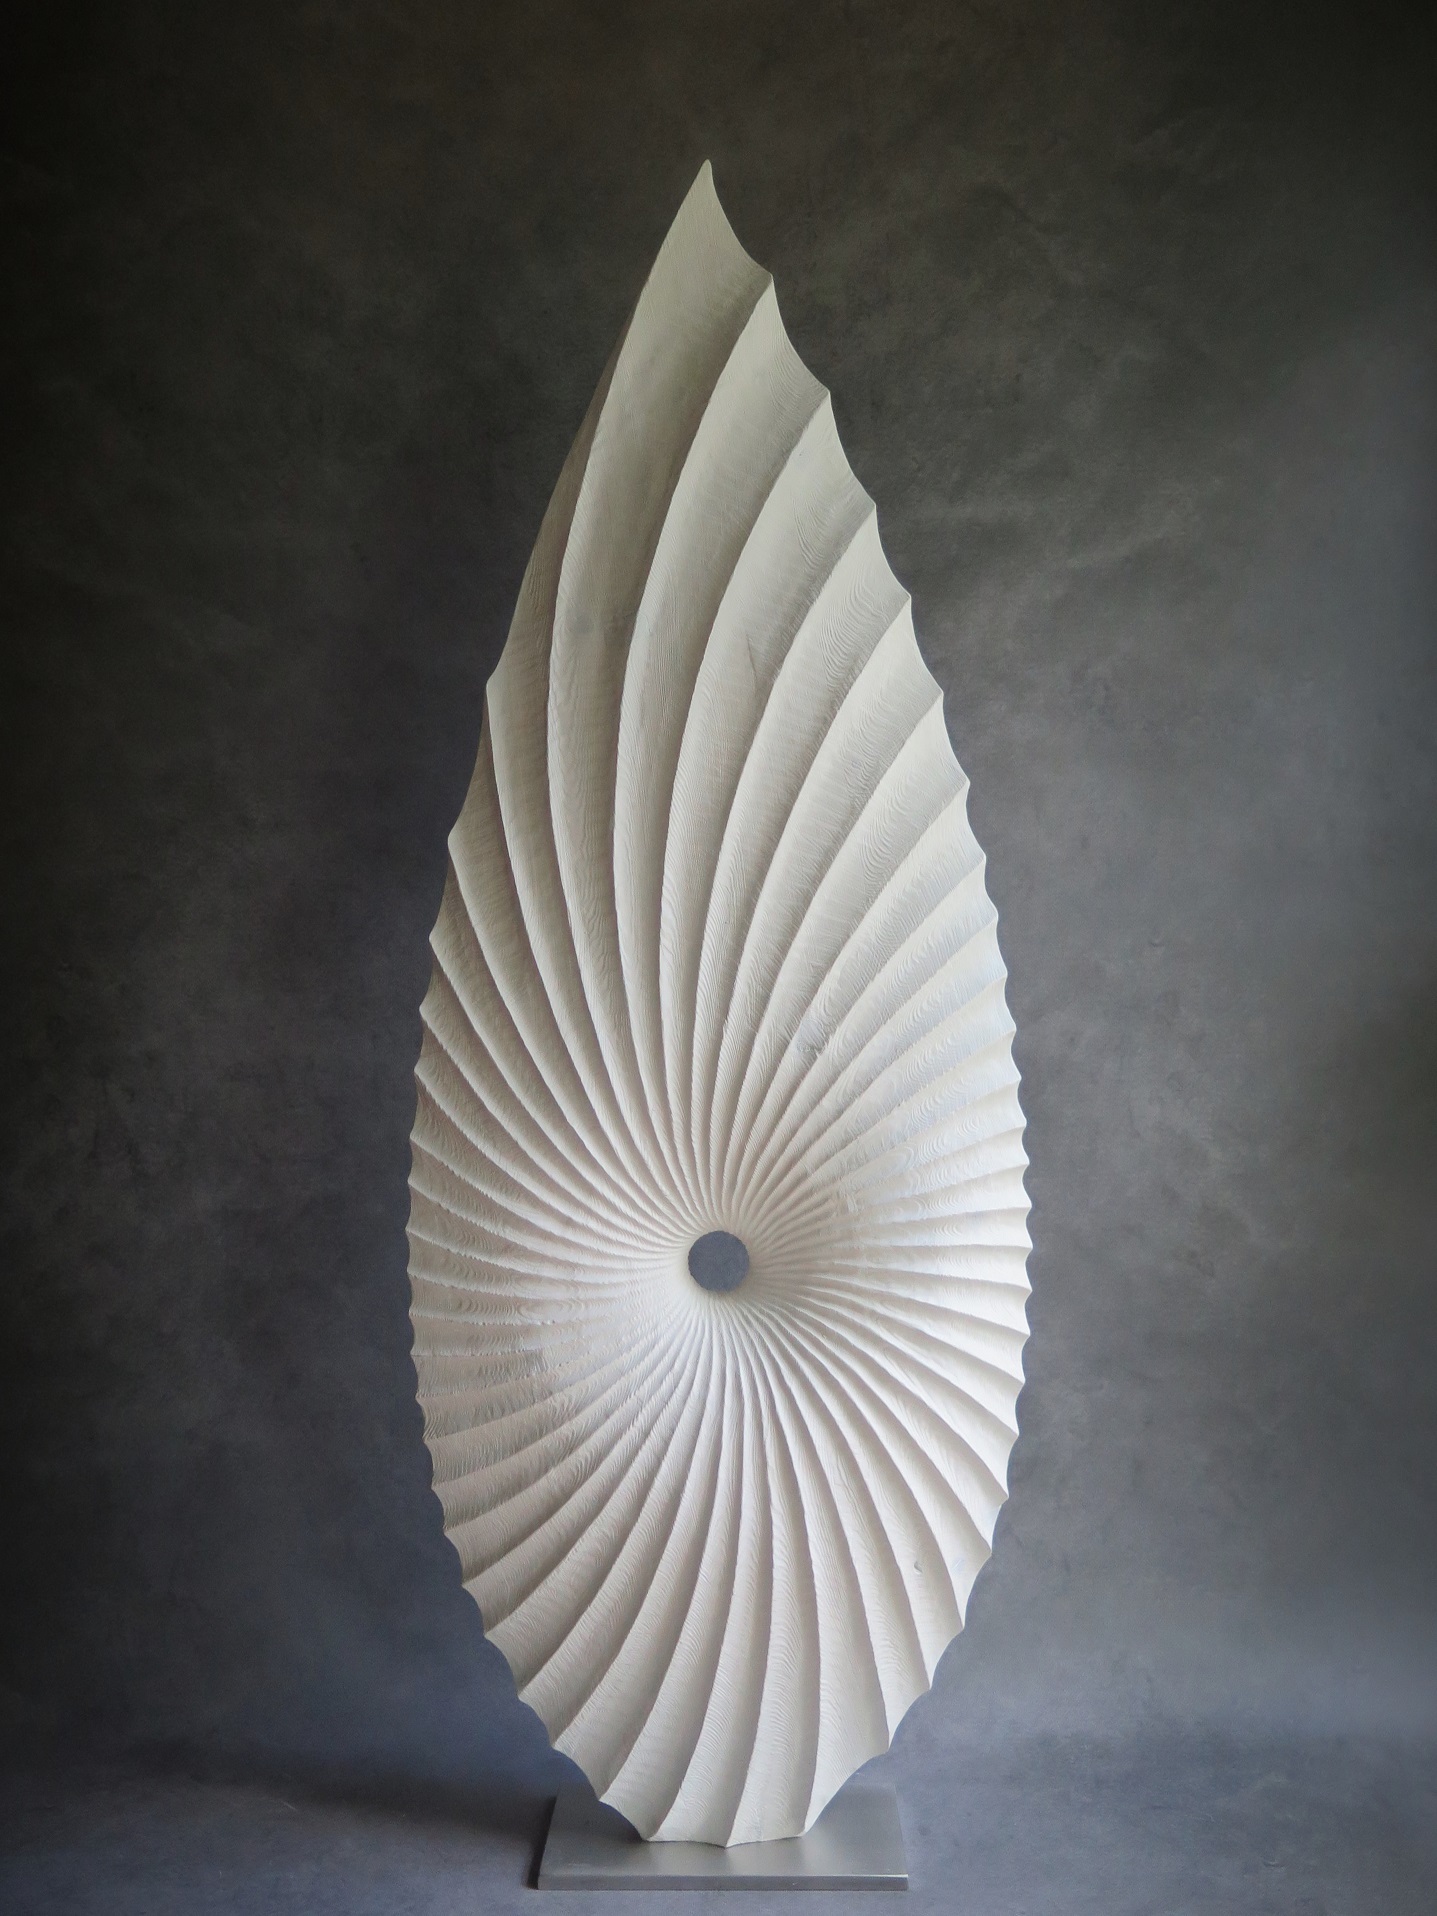 'Swirl' by Benoit Averly at Bo Design Group at Salon Art + Design 2023 in Effect Magazine